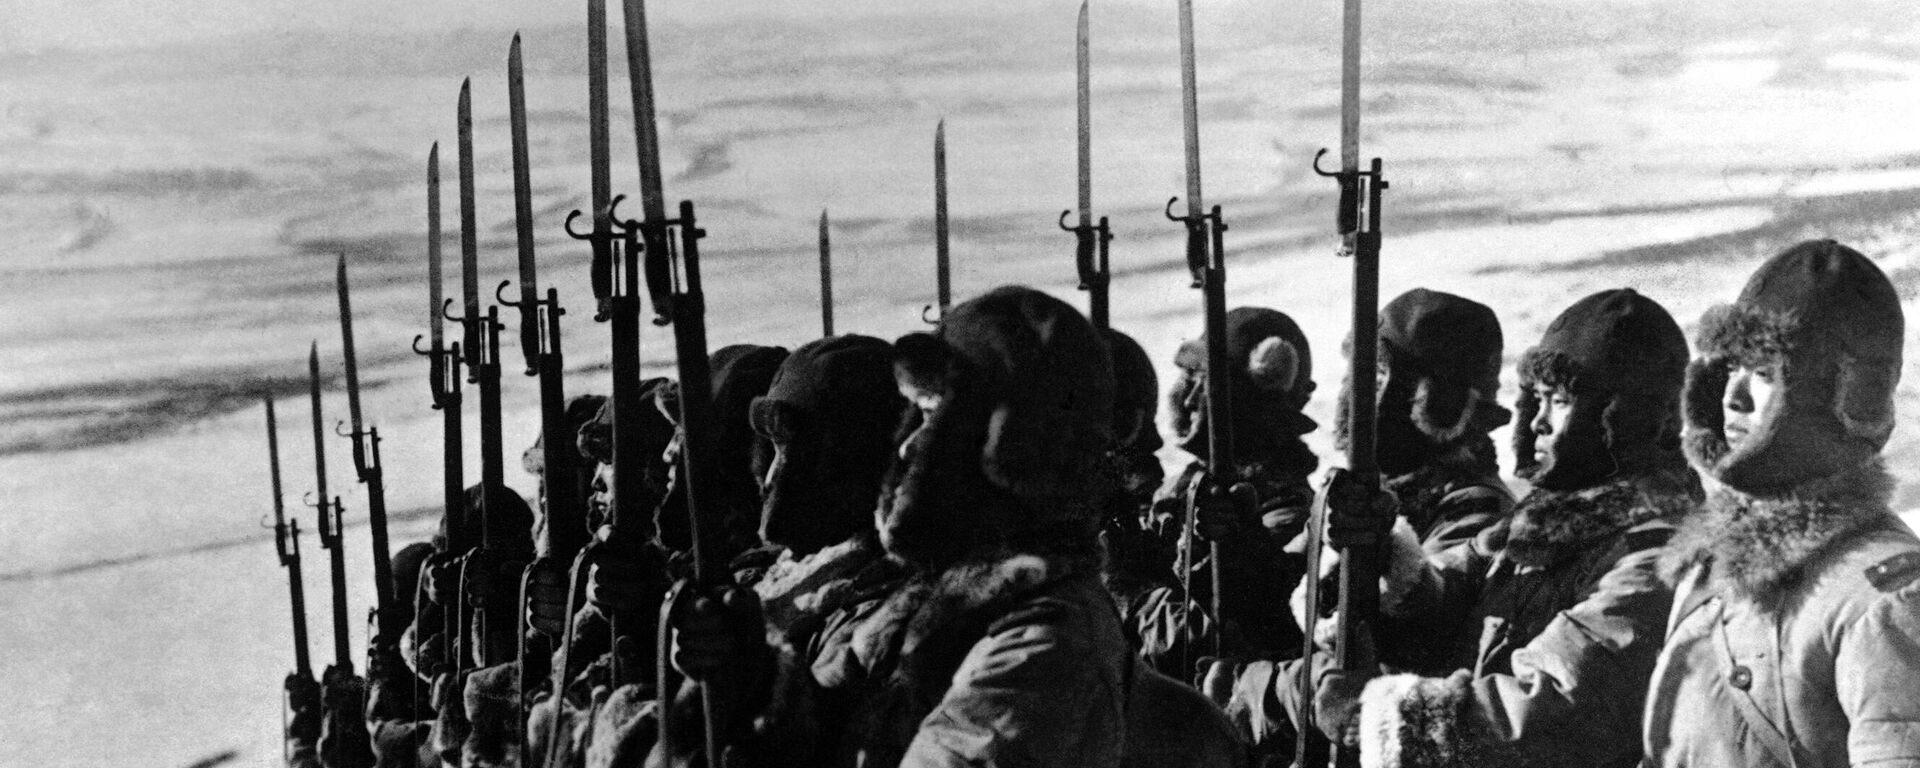 Soldados japoneses cerca de la frontera de la URSS, en Siberia - Sputnik Mundo, 1920, 09.08.2021